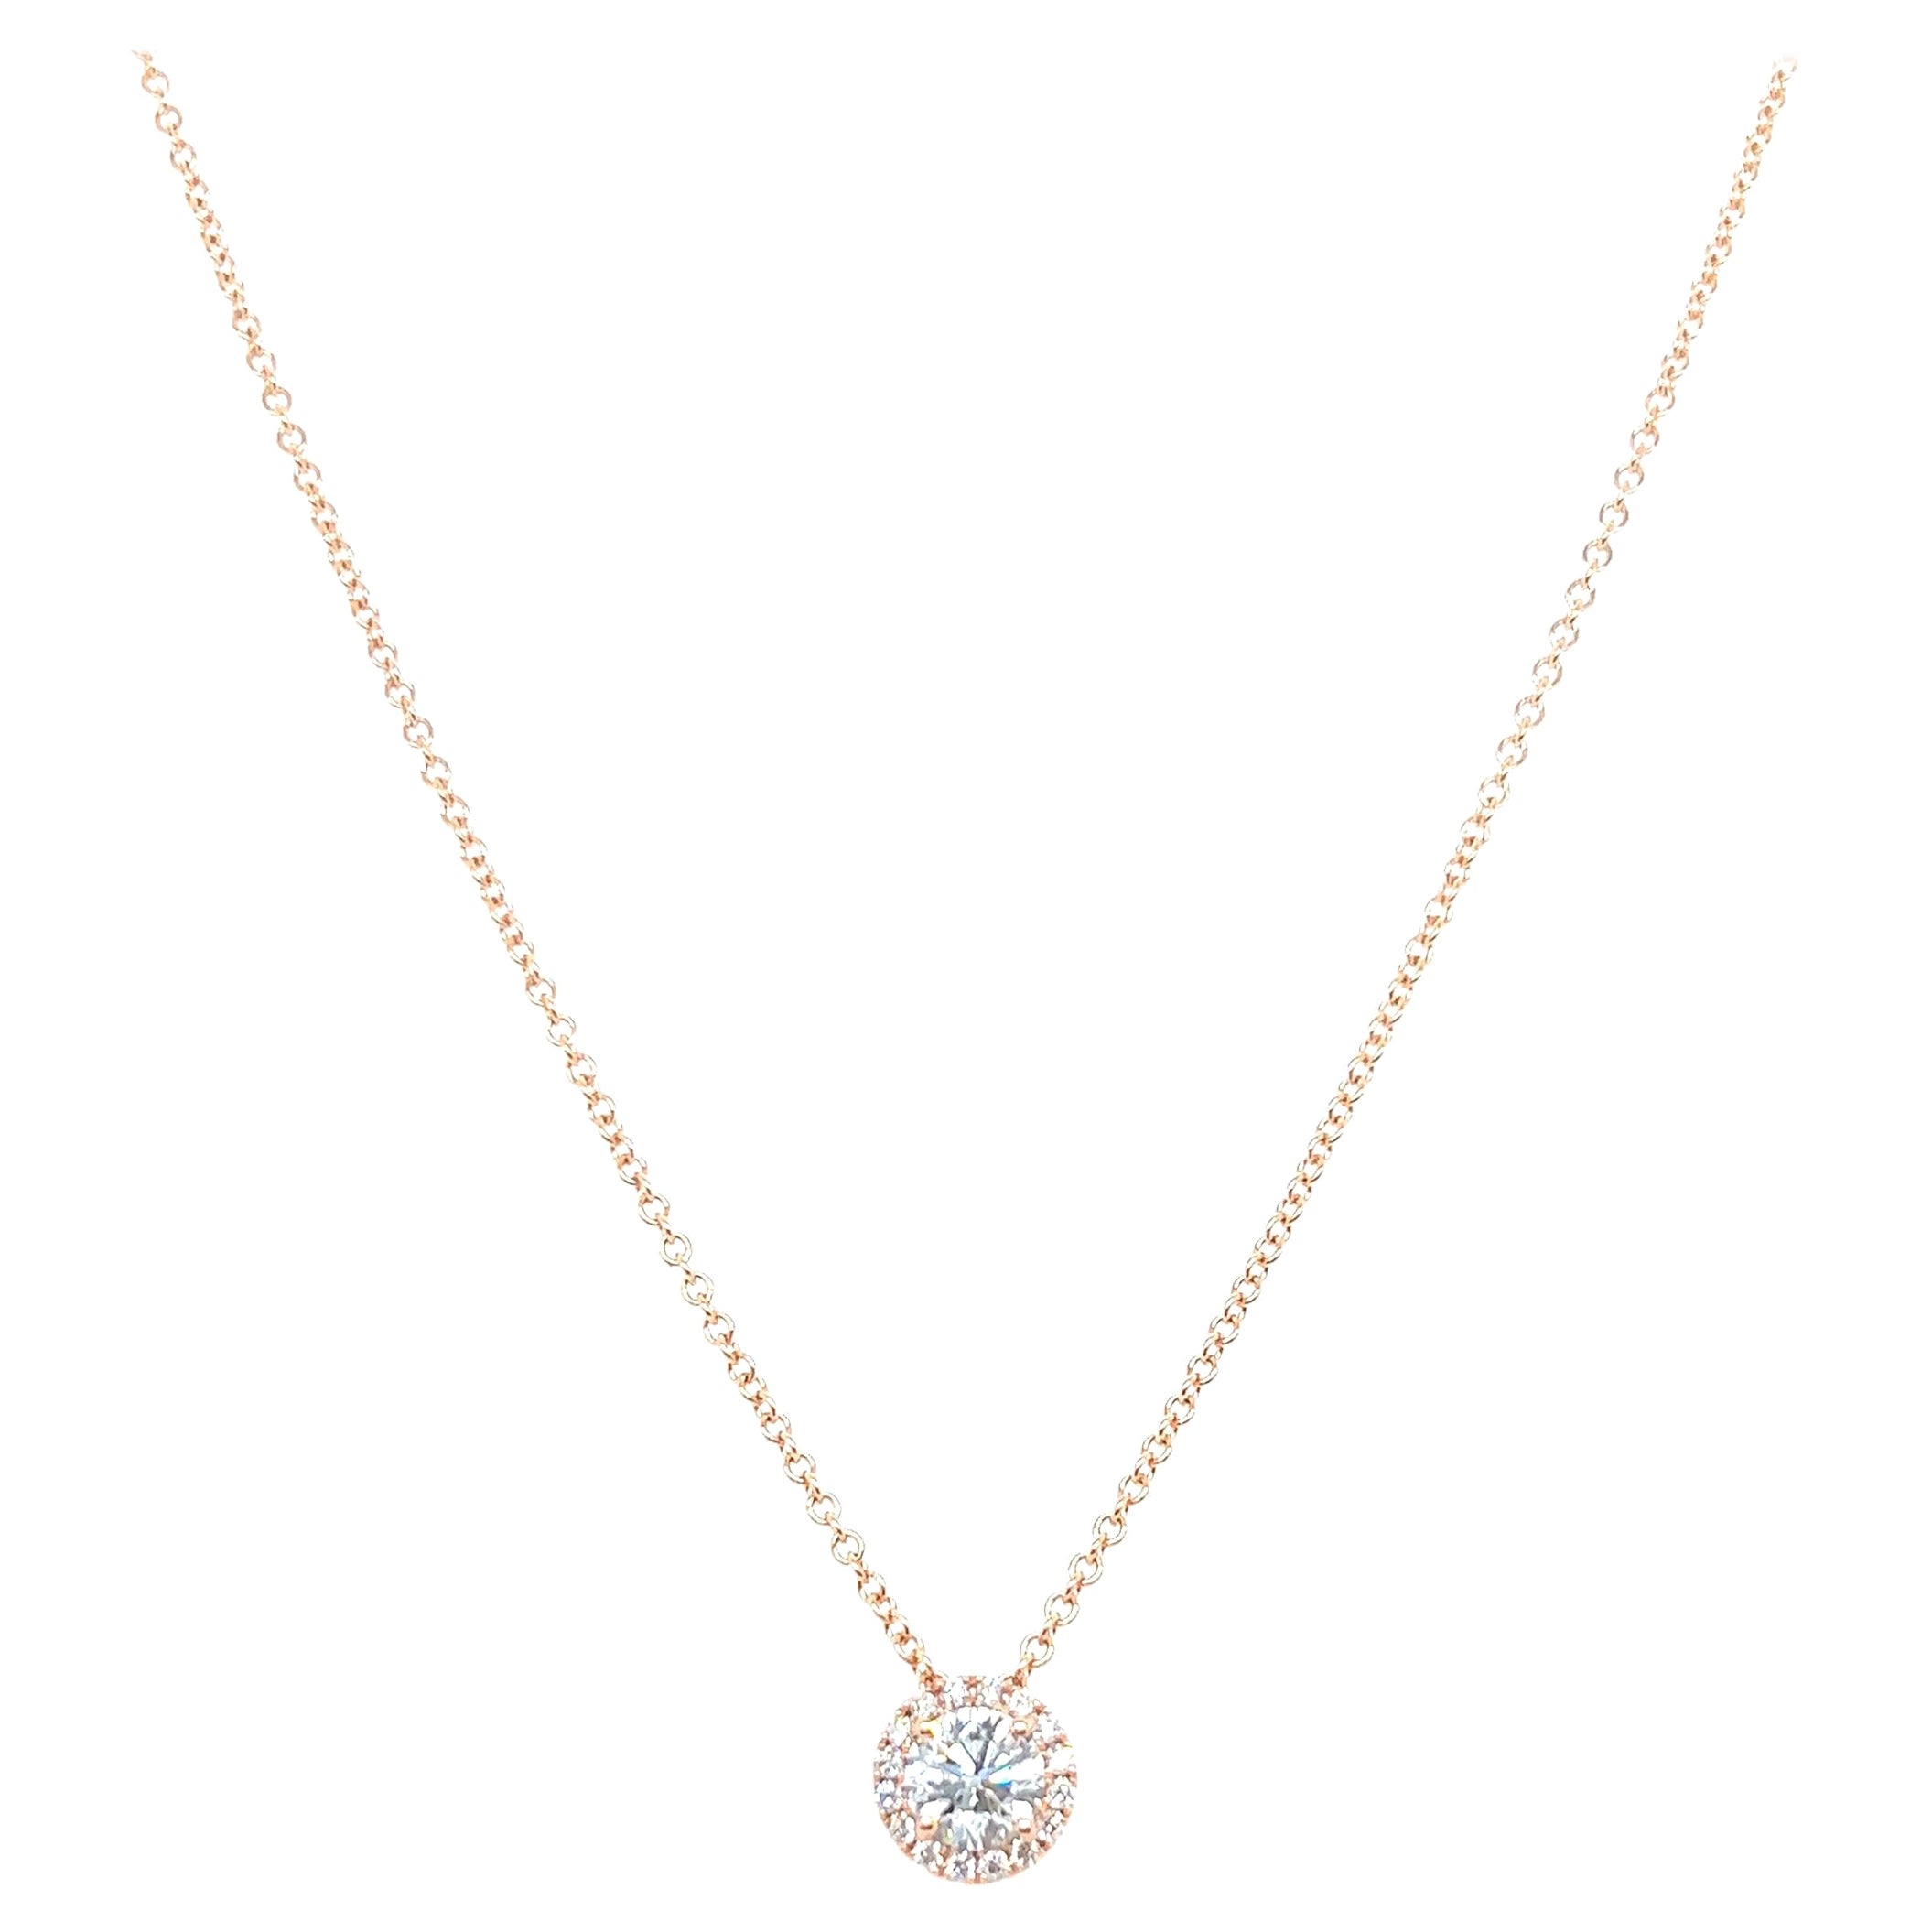 14k White Gold 0.65 Carat Round Cut Diamond Solitaire Pendant Necklace